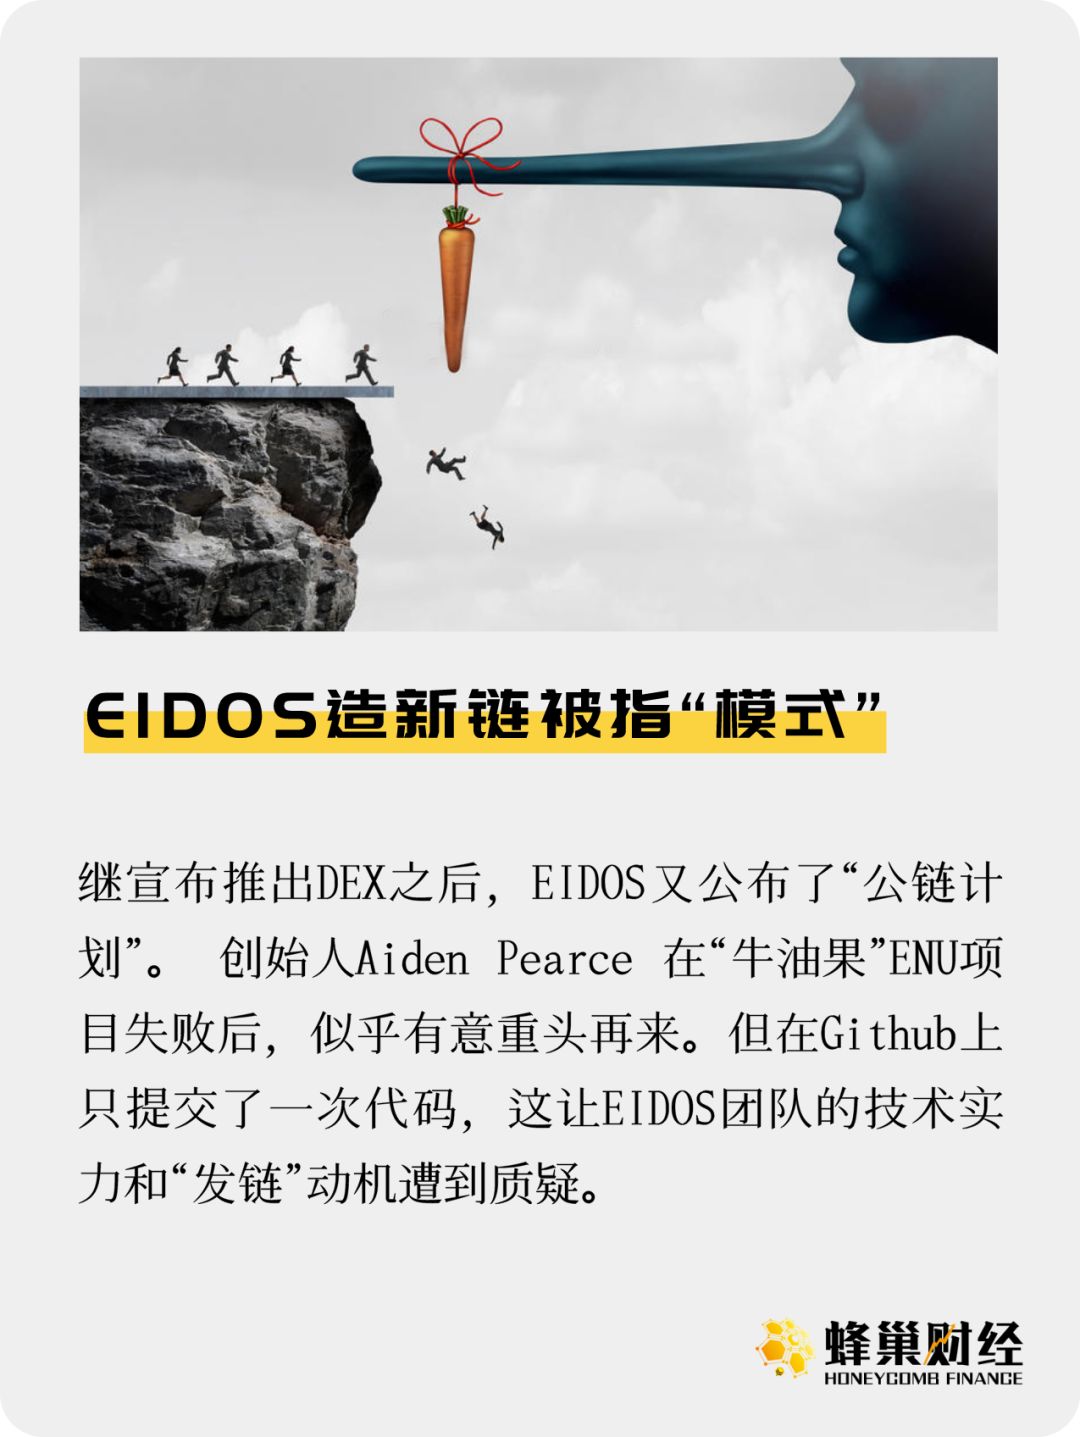 EIDOS發新鏈 將部署智能合約可隨時退貨YAS